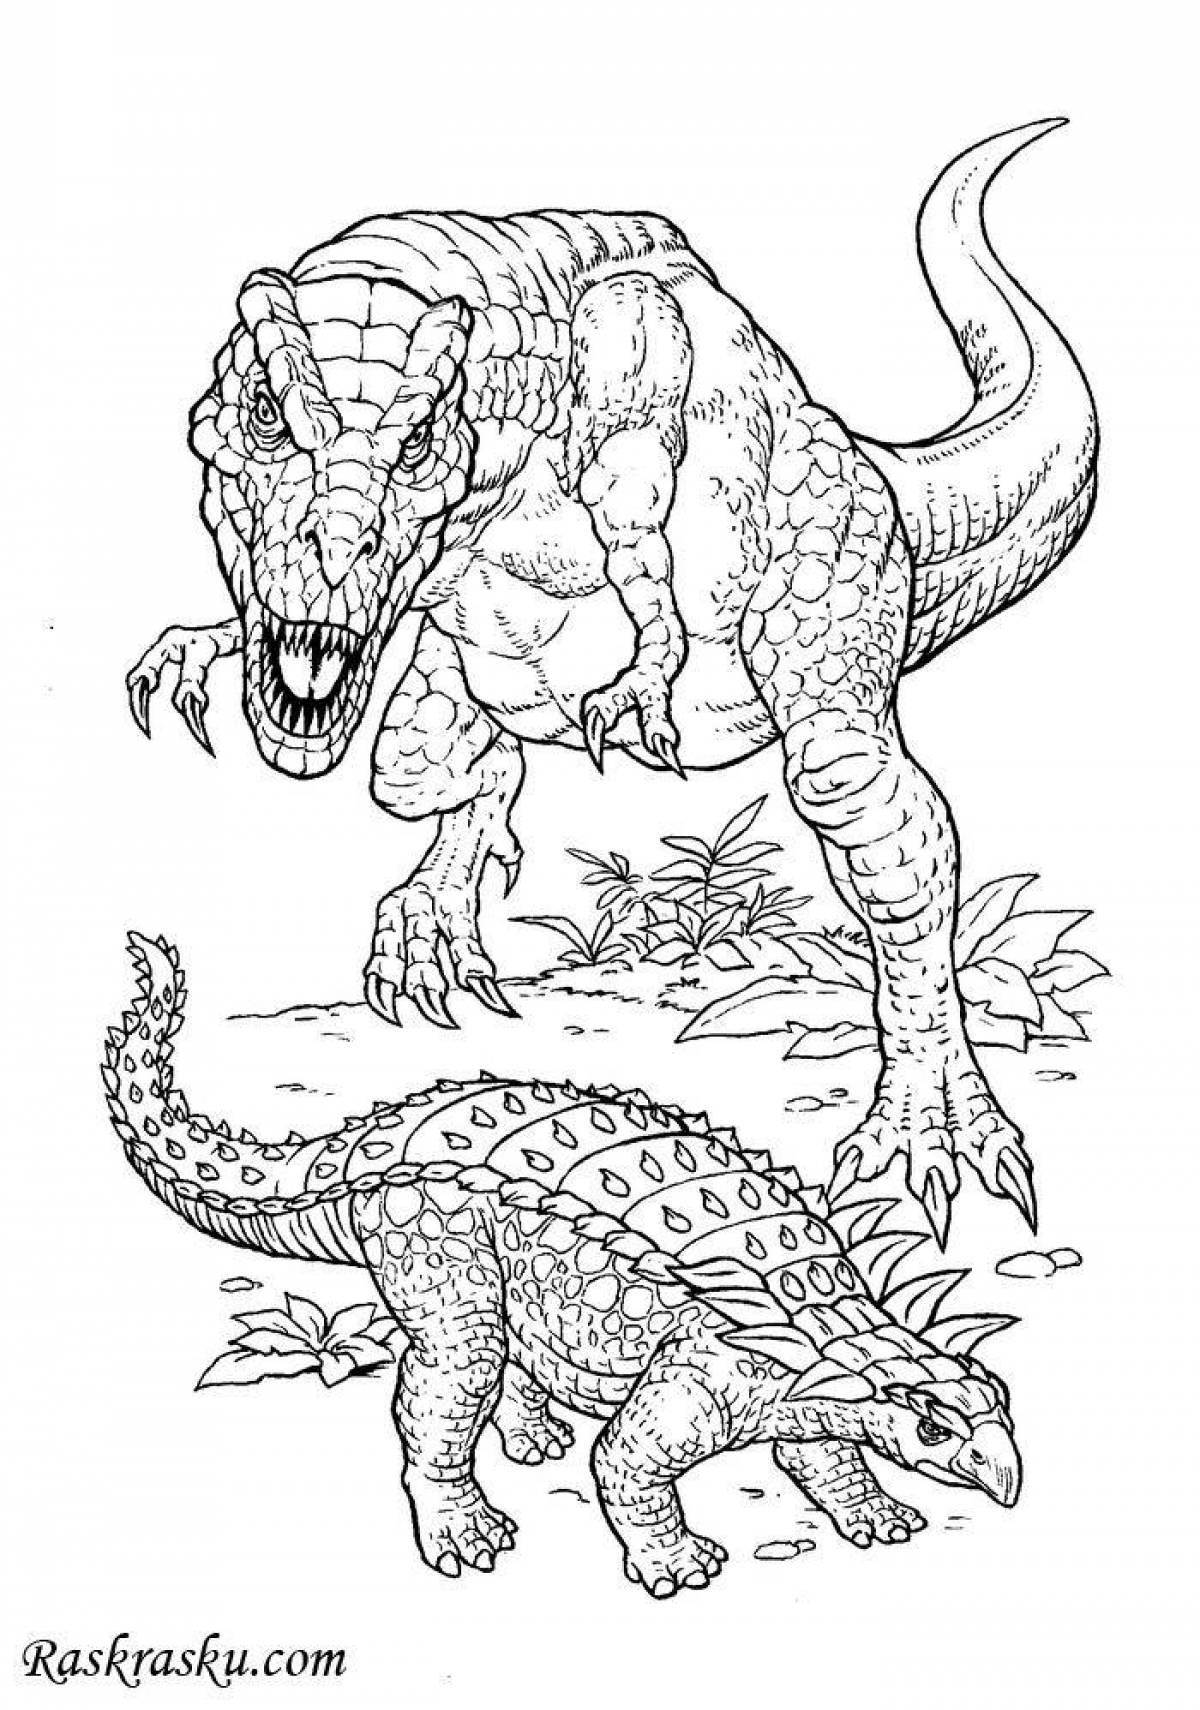 Tirex dinosaur coloring book